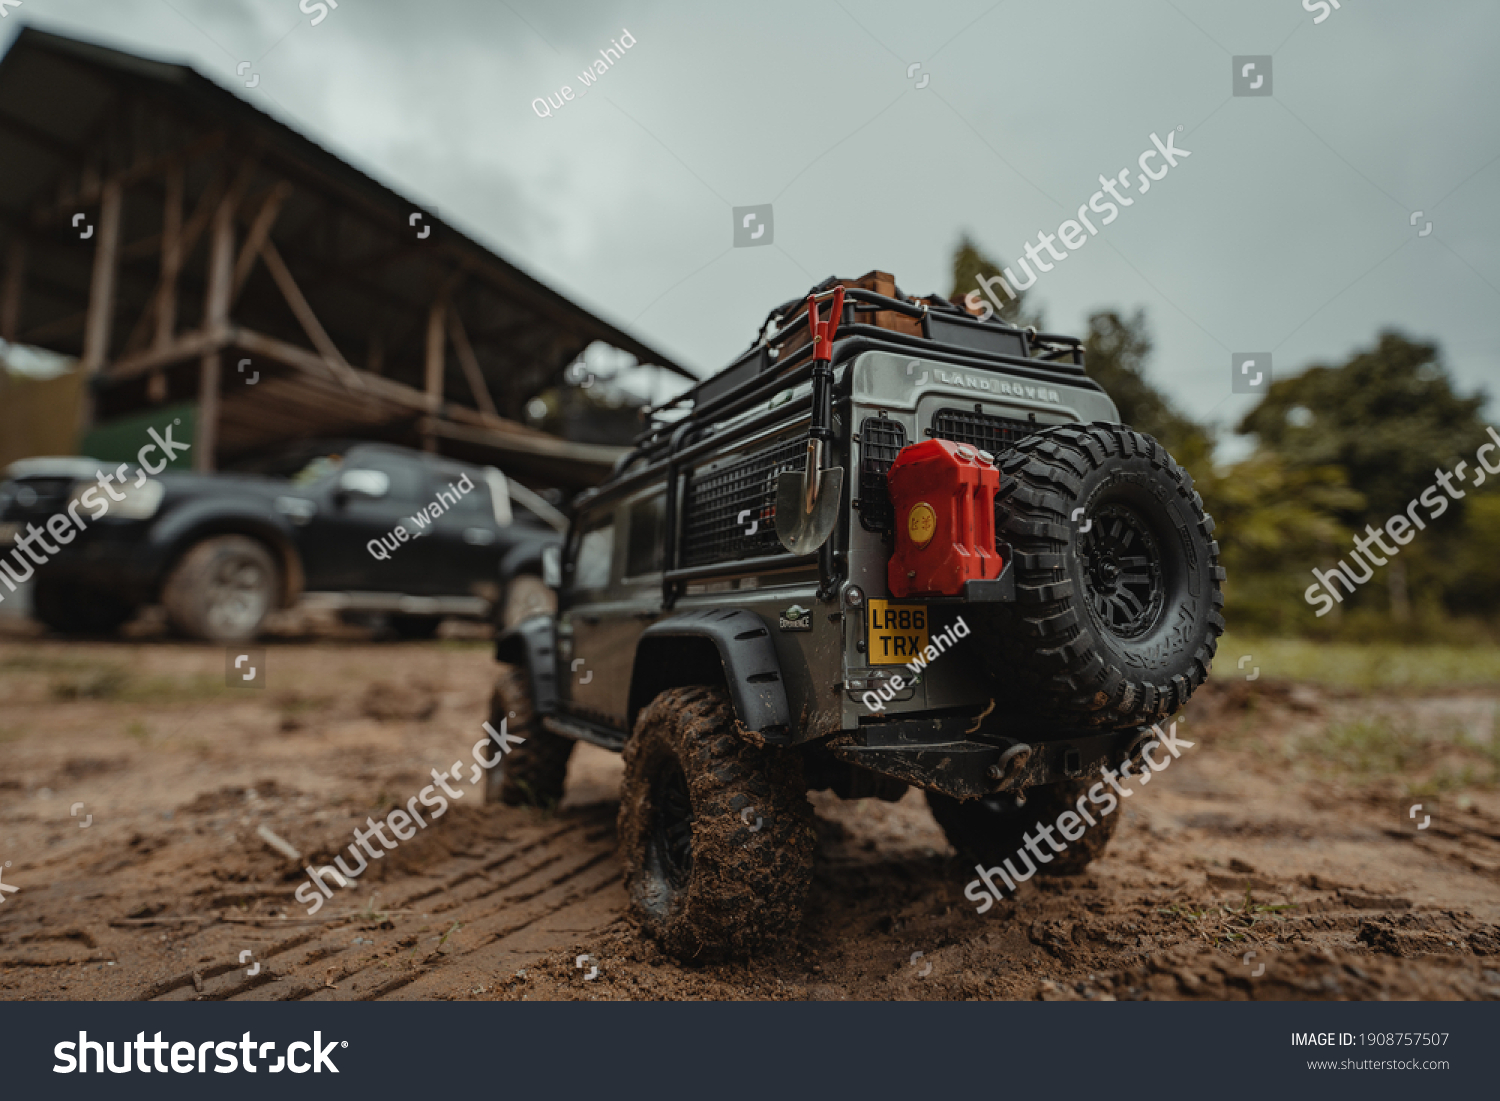 21,073 Jeep in landscape Images, Stock Photos & Vectors | Shutterstock